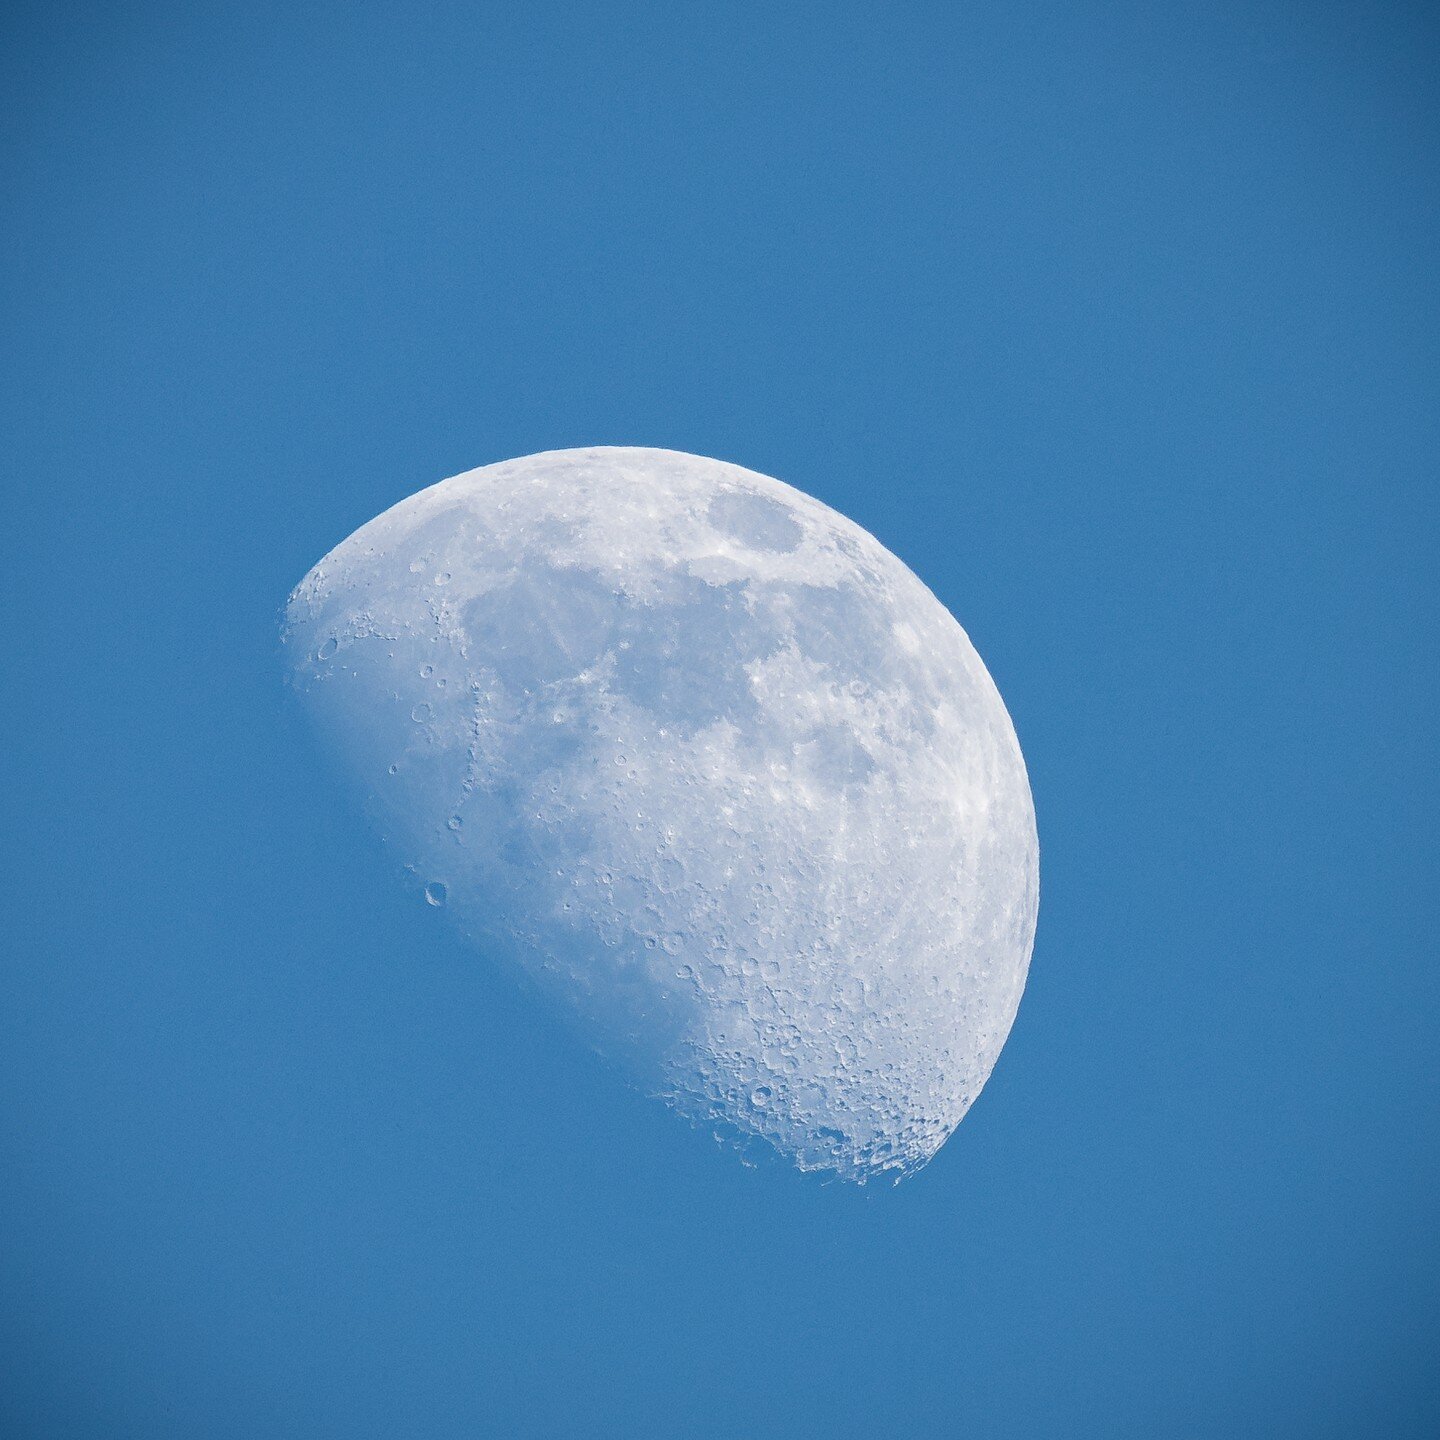 Handheld snap shot of the evening moon.

#canonr7 #moon #uk #sky #blue #lunar